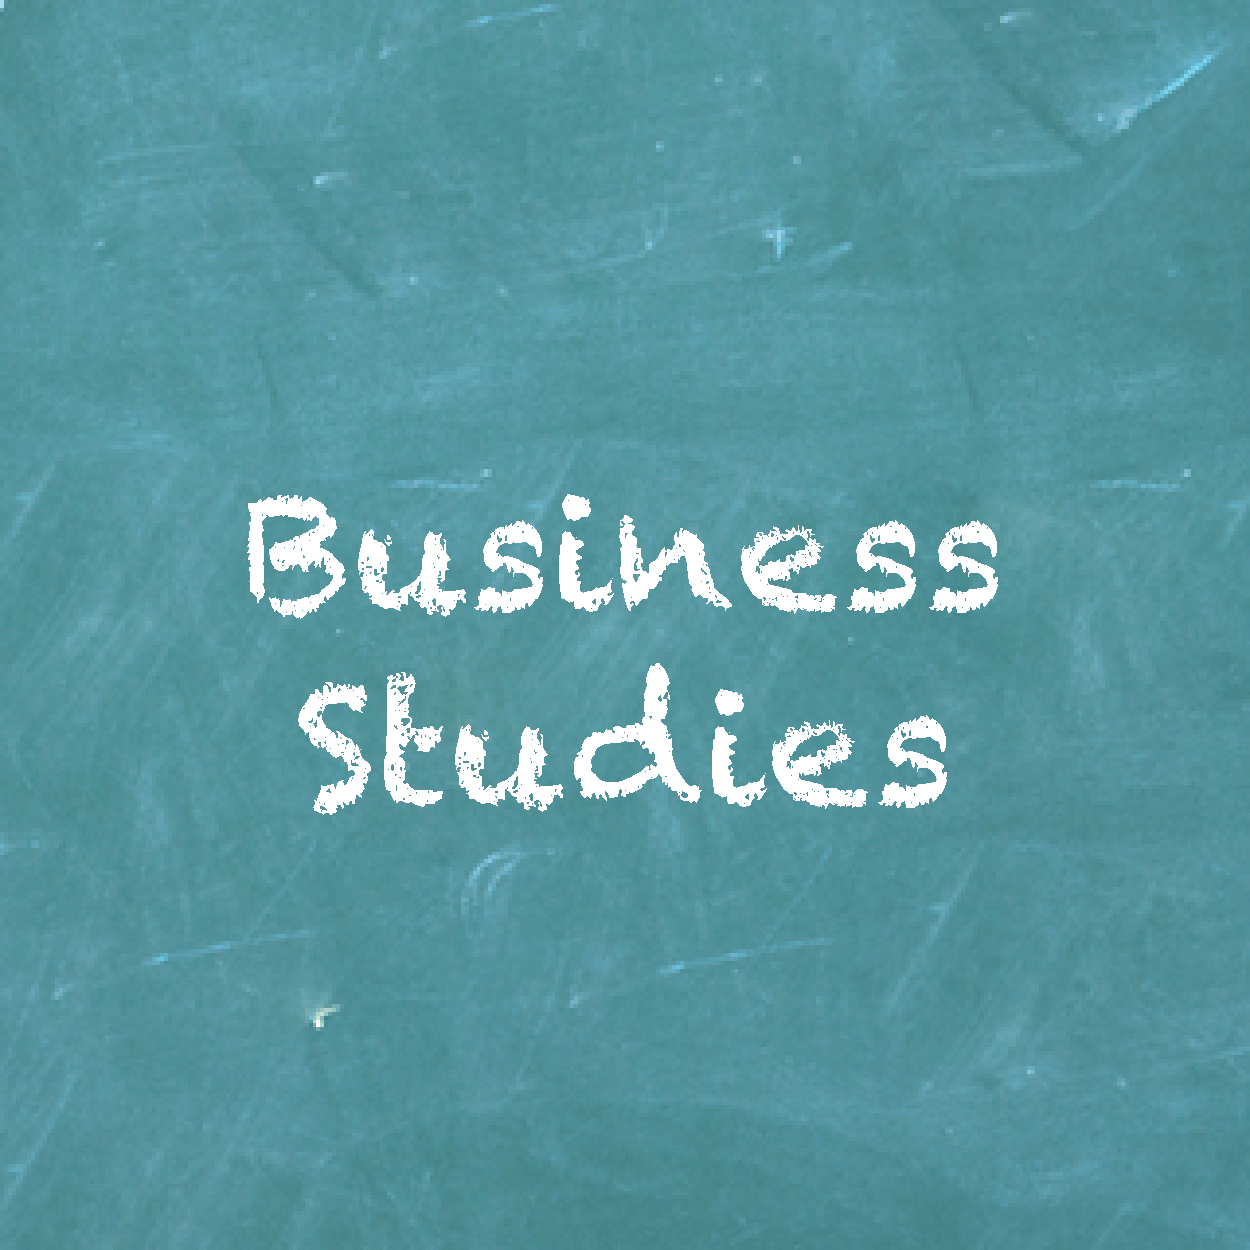 Business studies past exam paper